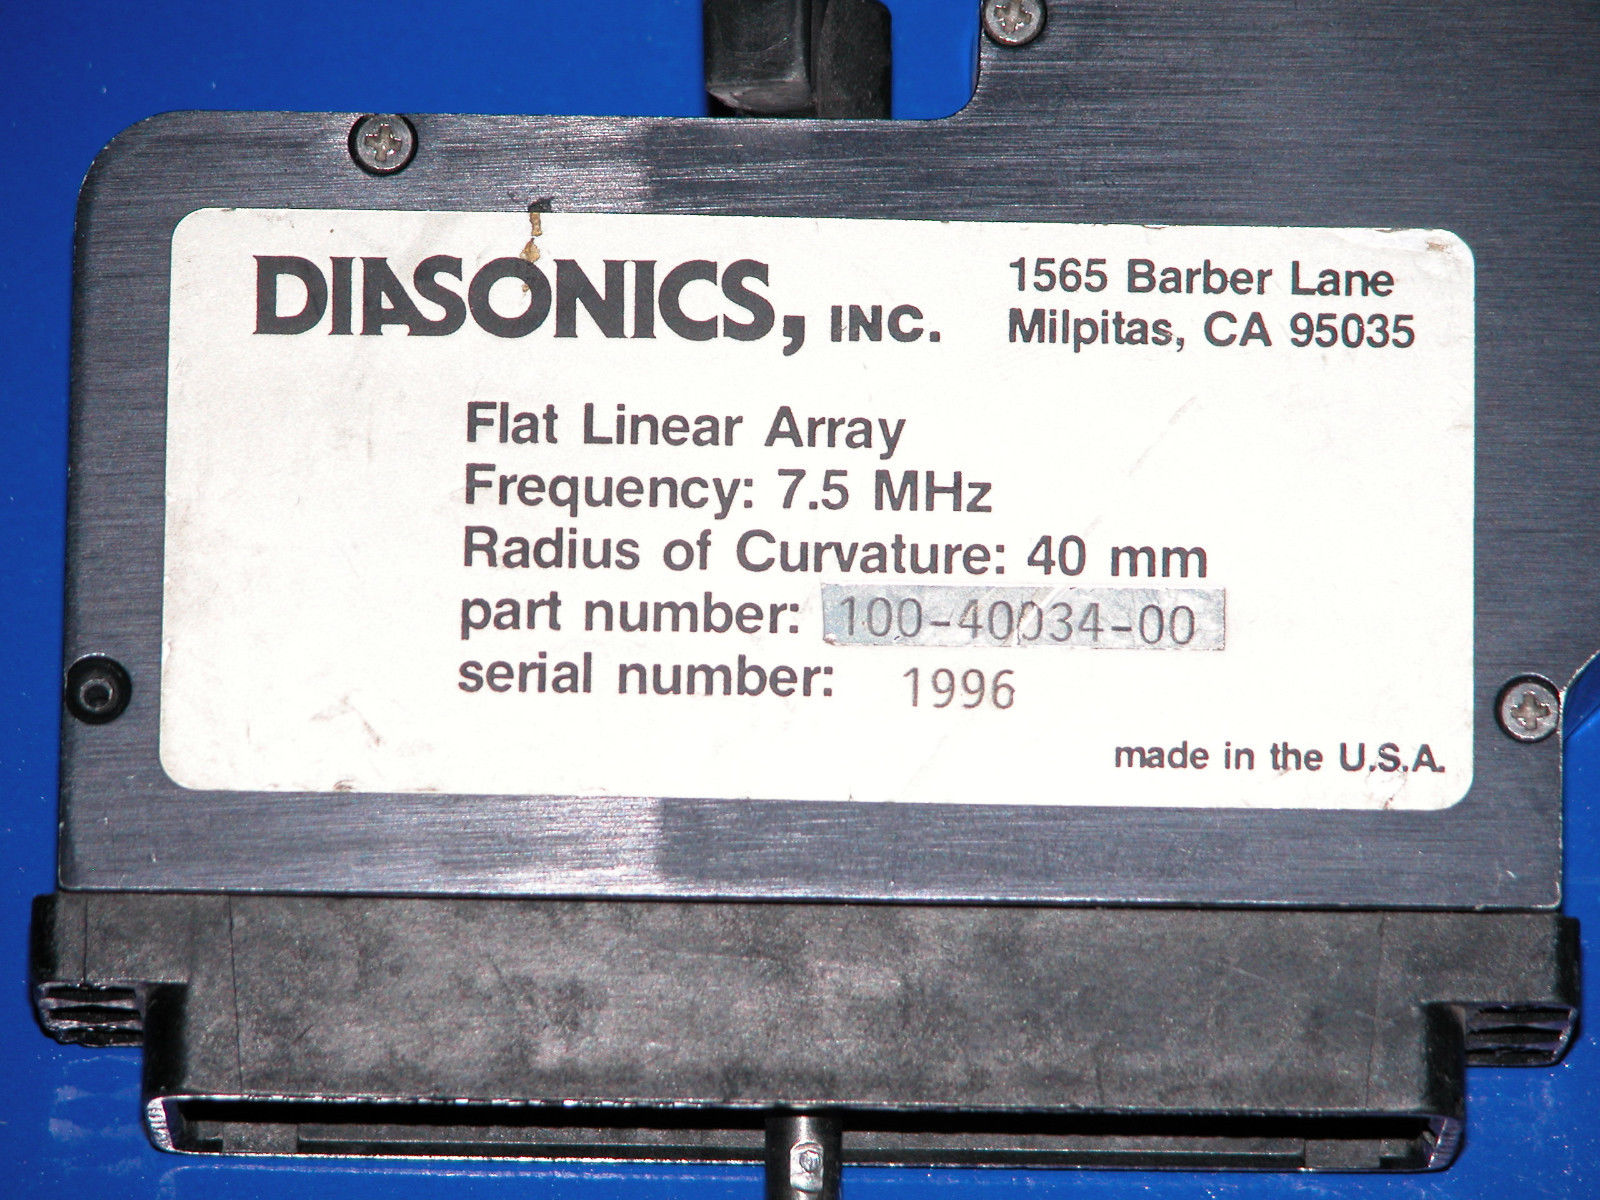 Diasonics probe - FLA - flat linear array - 7.5 MHZ DIAGNOSTIC ULTRASOUND MACHINES FOR SALE